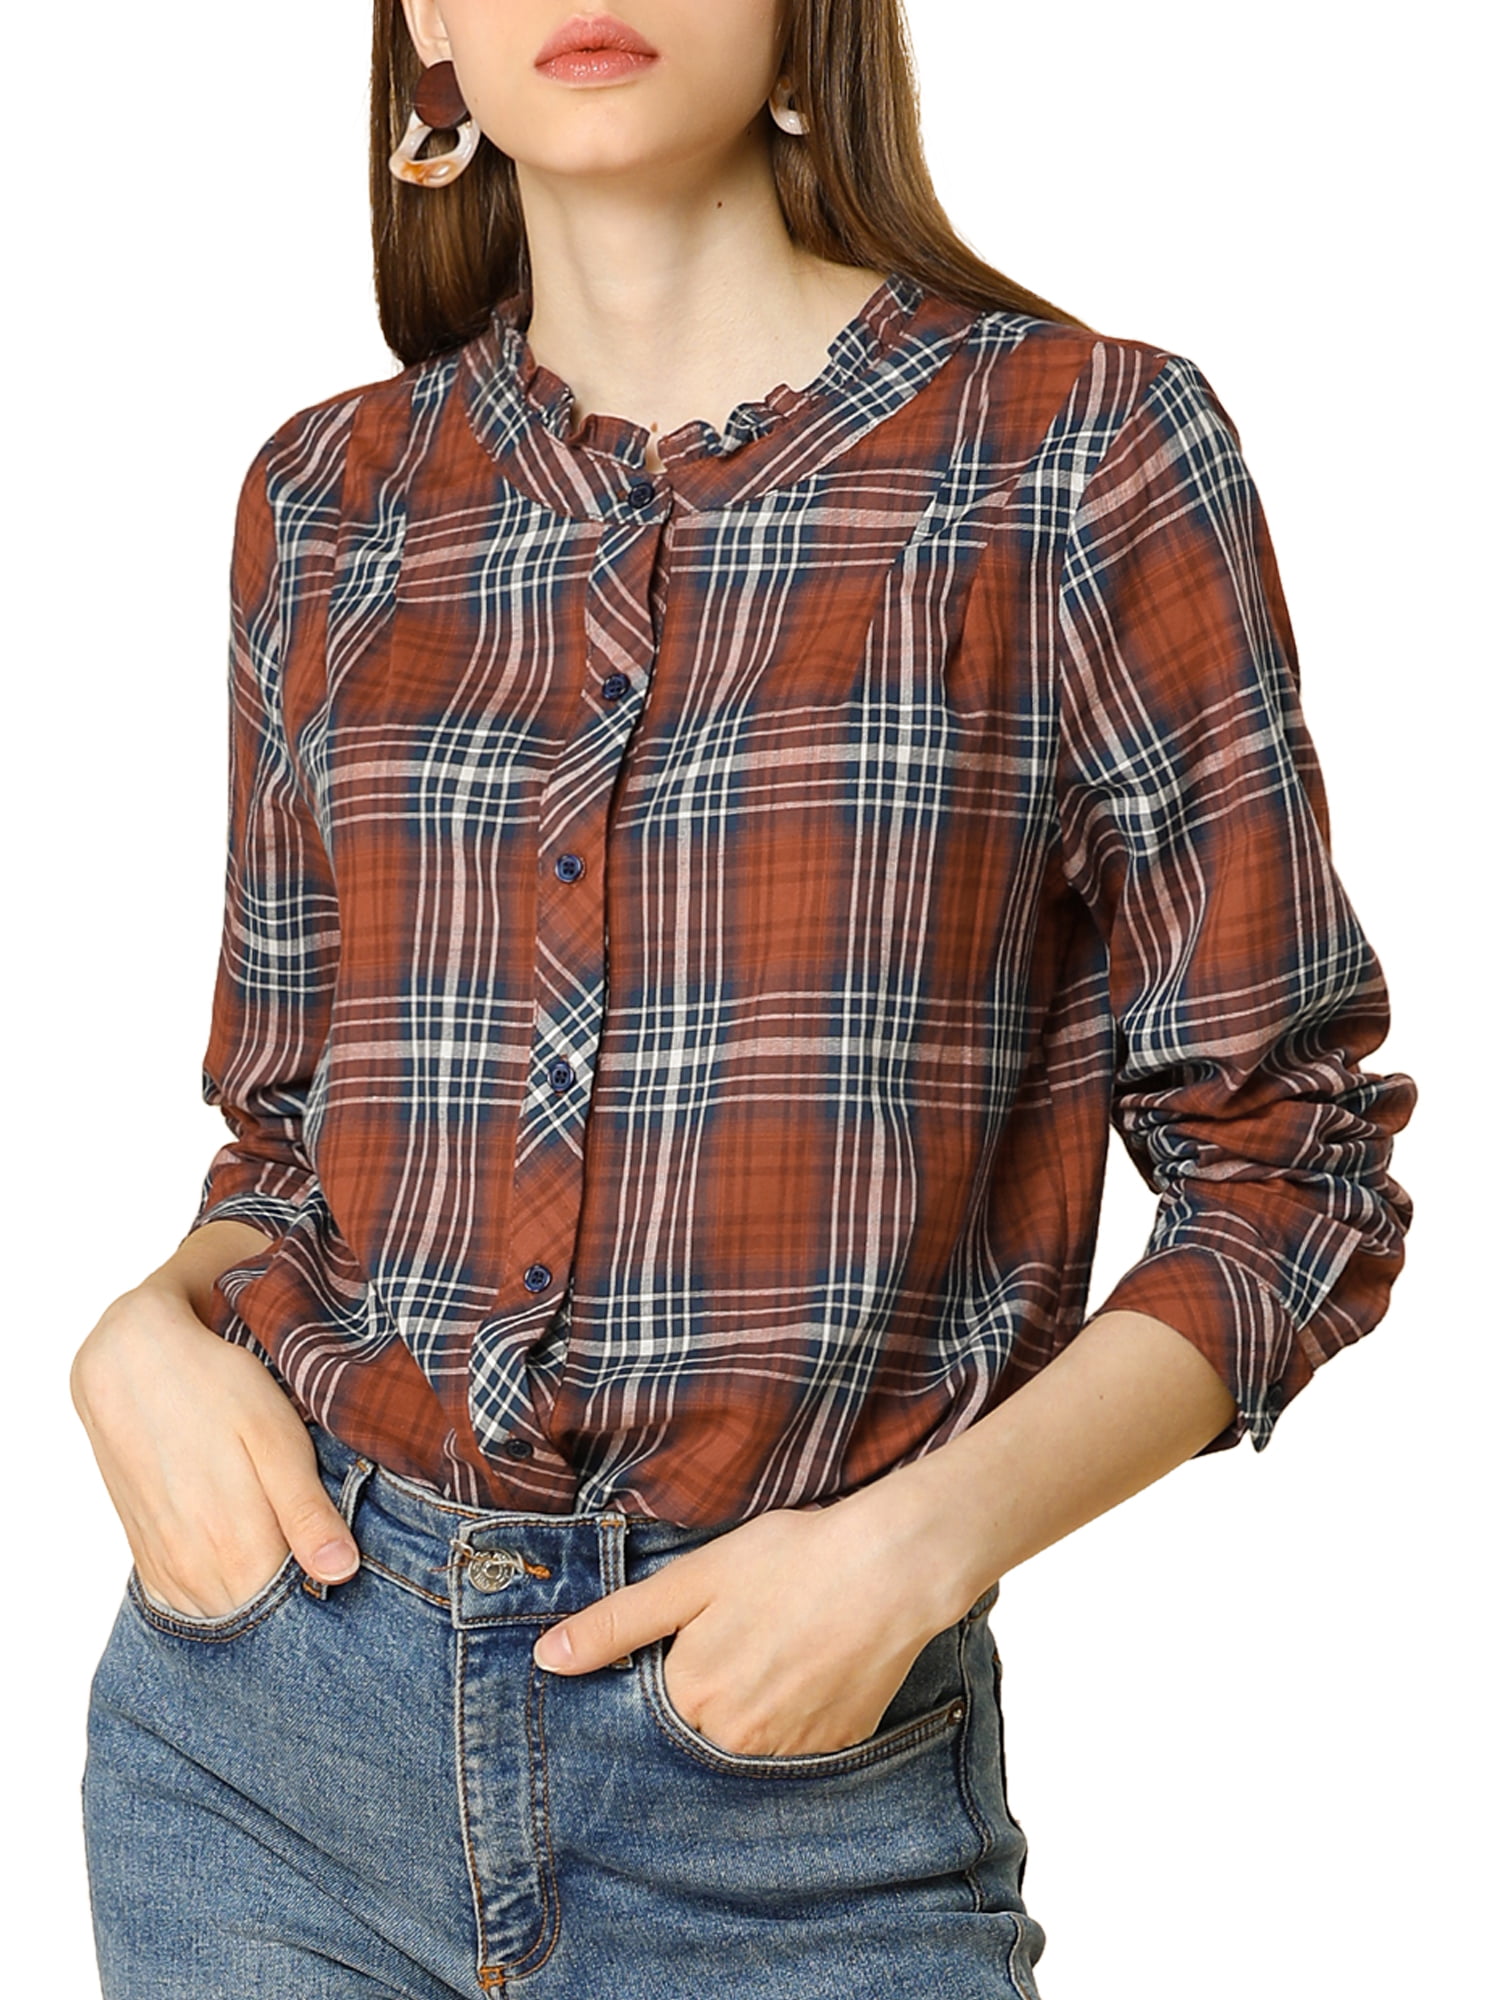 Unique Bargains Allegra K Women S Fall Blouse Long Sleeve Ruffle Neck Plaid Shirt Red